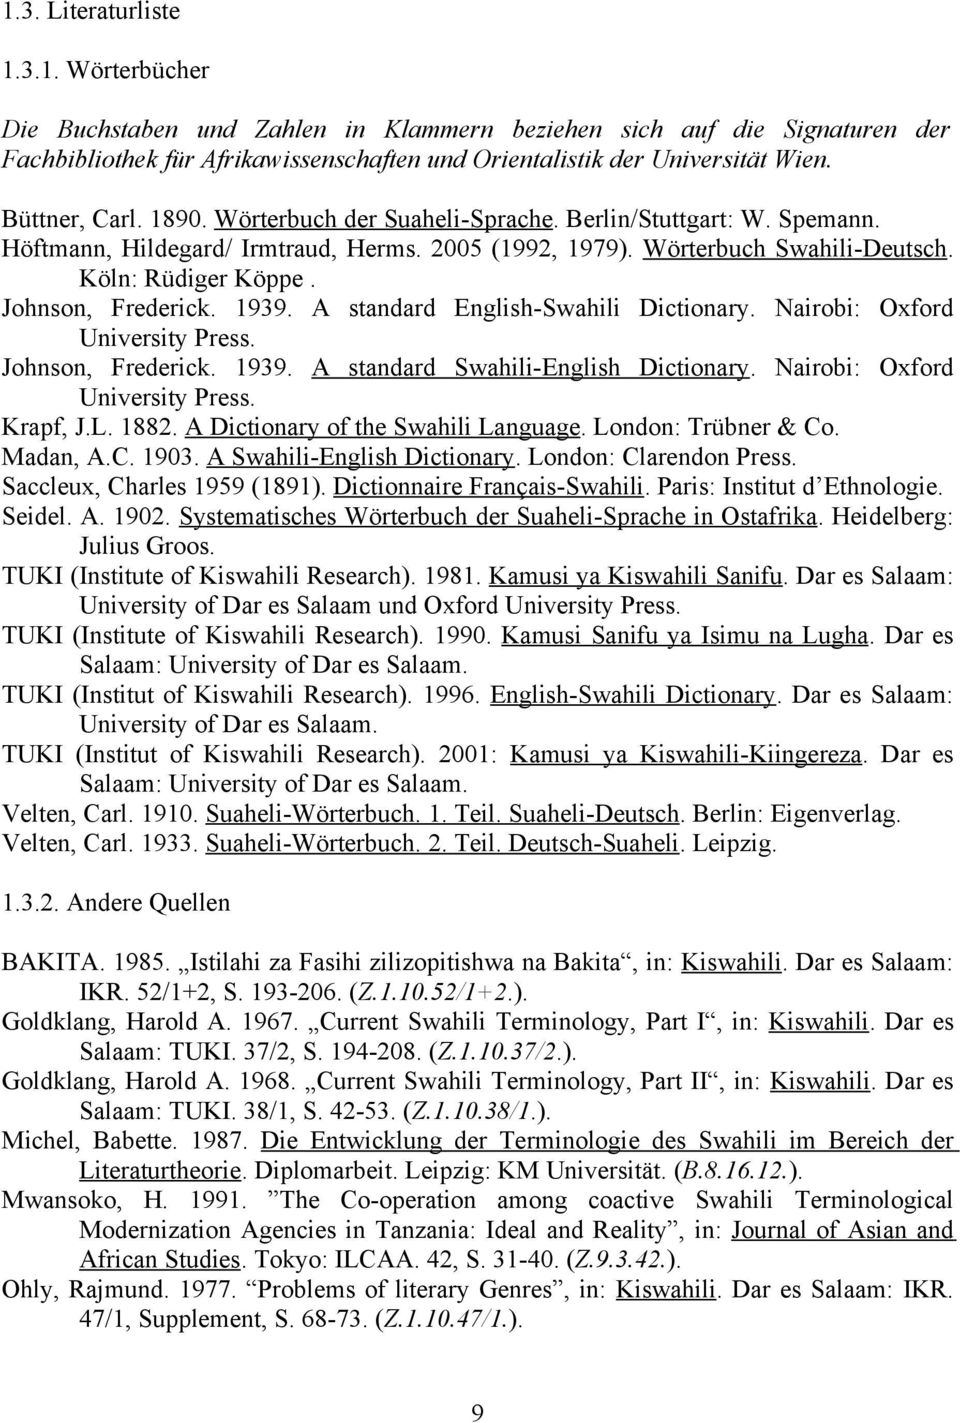 Johnson, Frederick. 1939. A standard English-Swahili Dictionary. Nairobi: Oxford University Press. Johnson, Frederick. 1939. A standard Swahili-English Dictionary. Nairobi: Oxford University Press. Krapf, J.